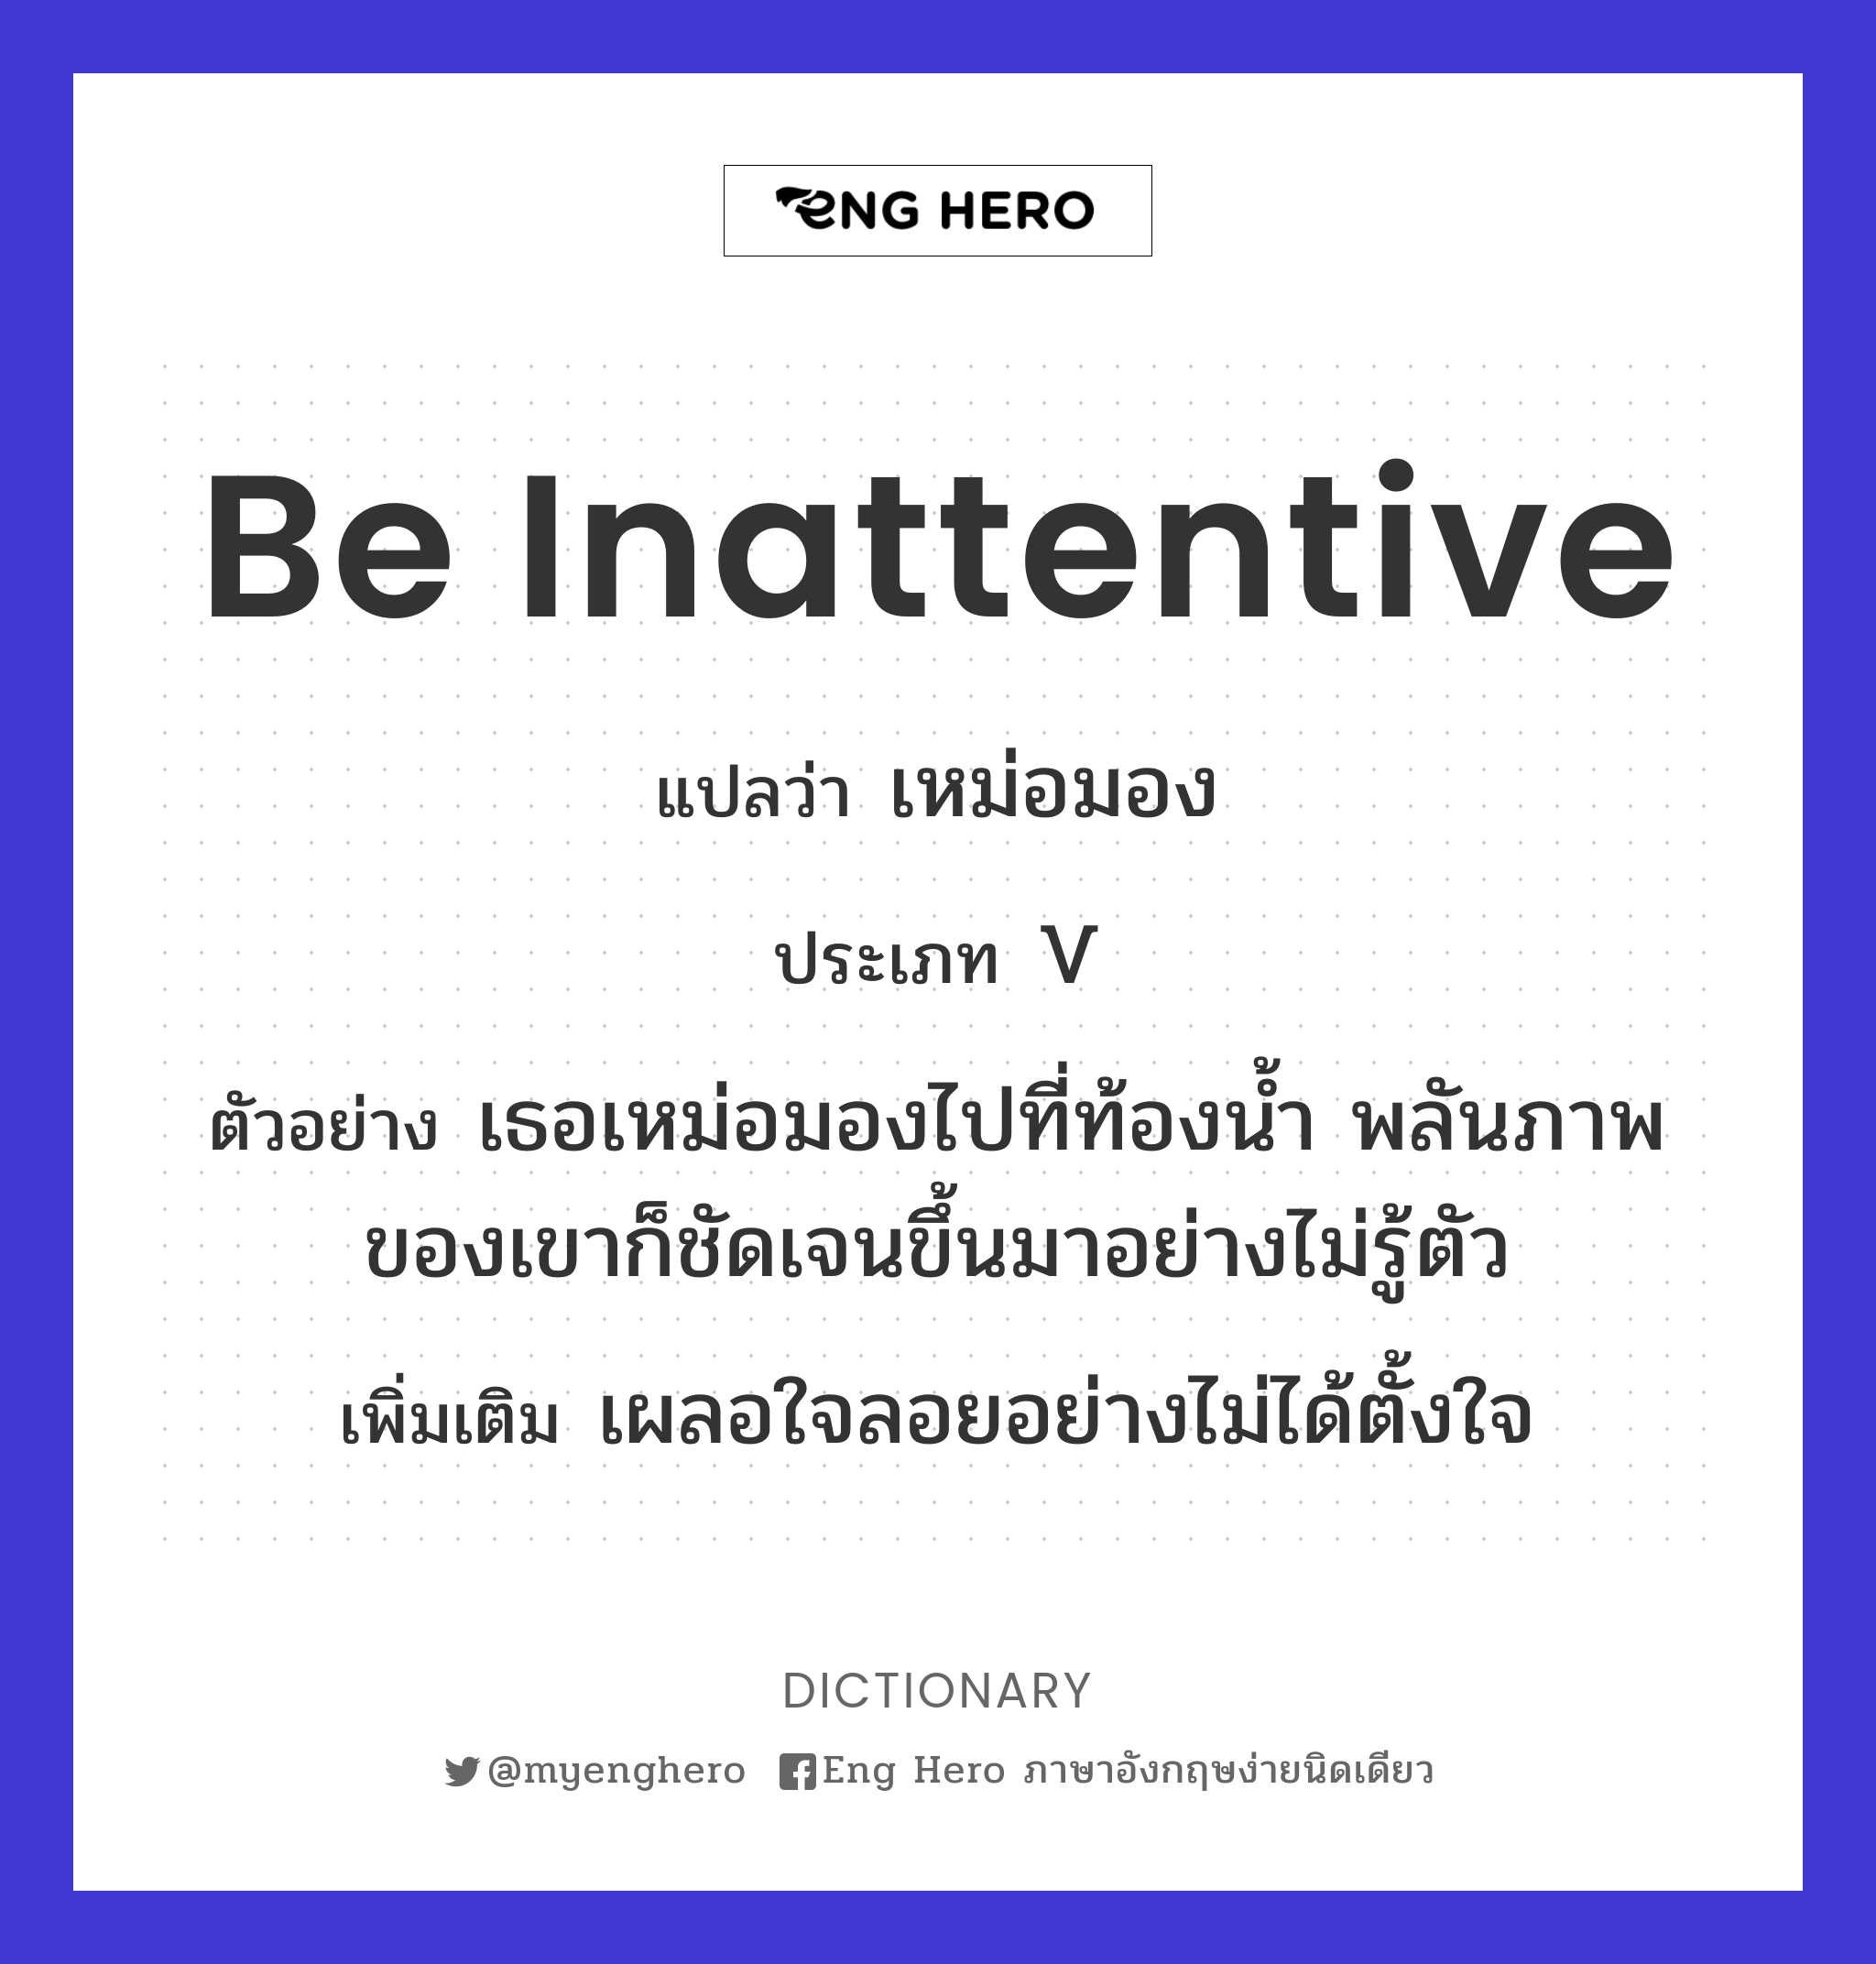 be inattentive